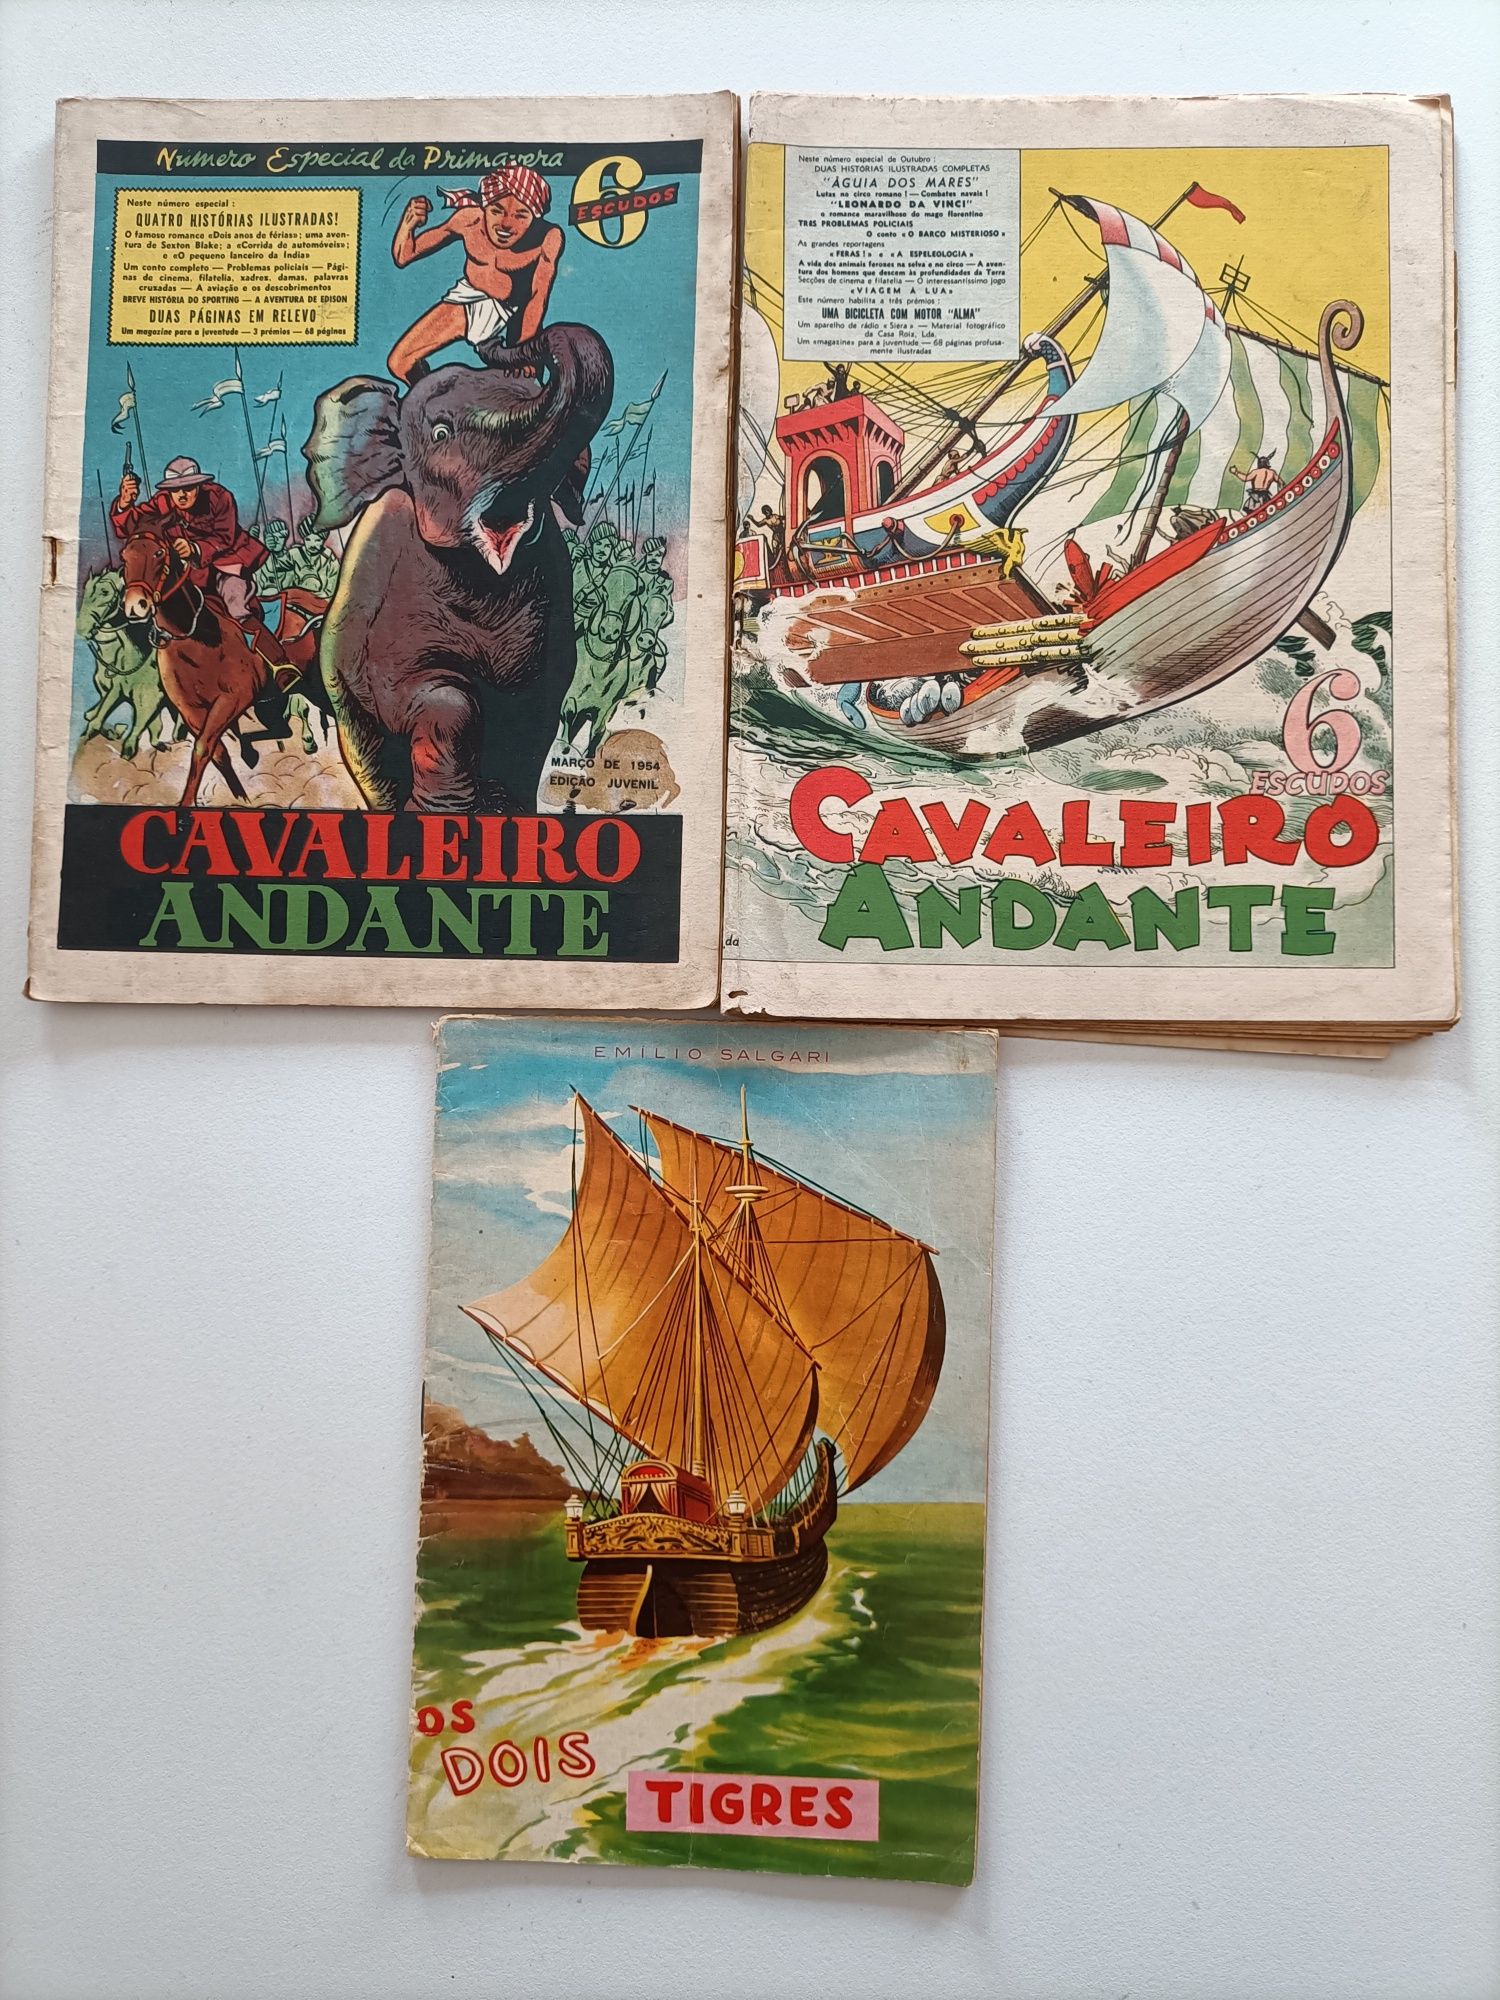 Revista do Cavaleiro Andante, e Albúns do Cavaleiro Andante